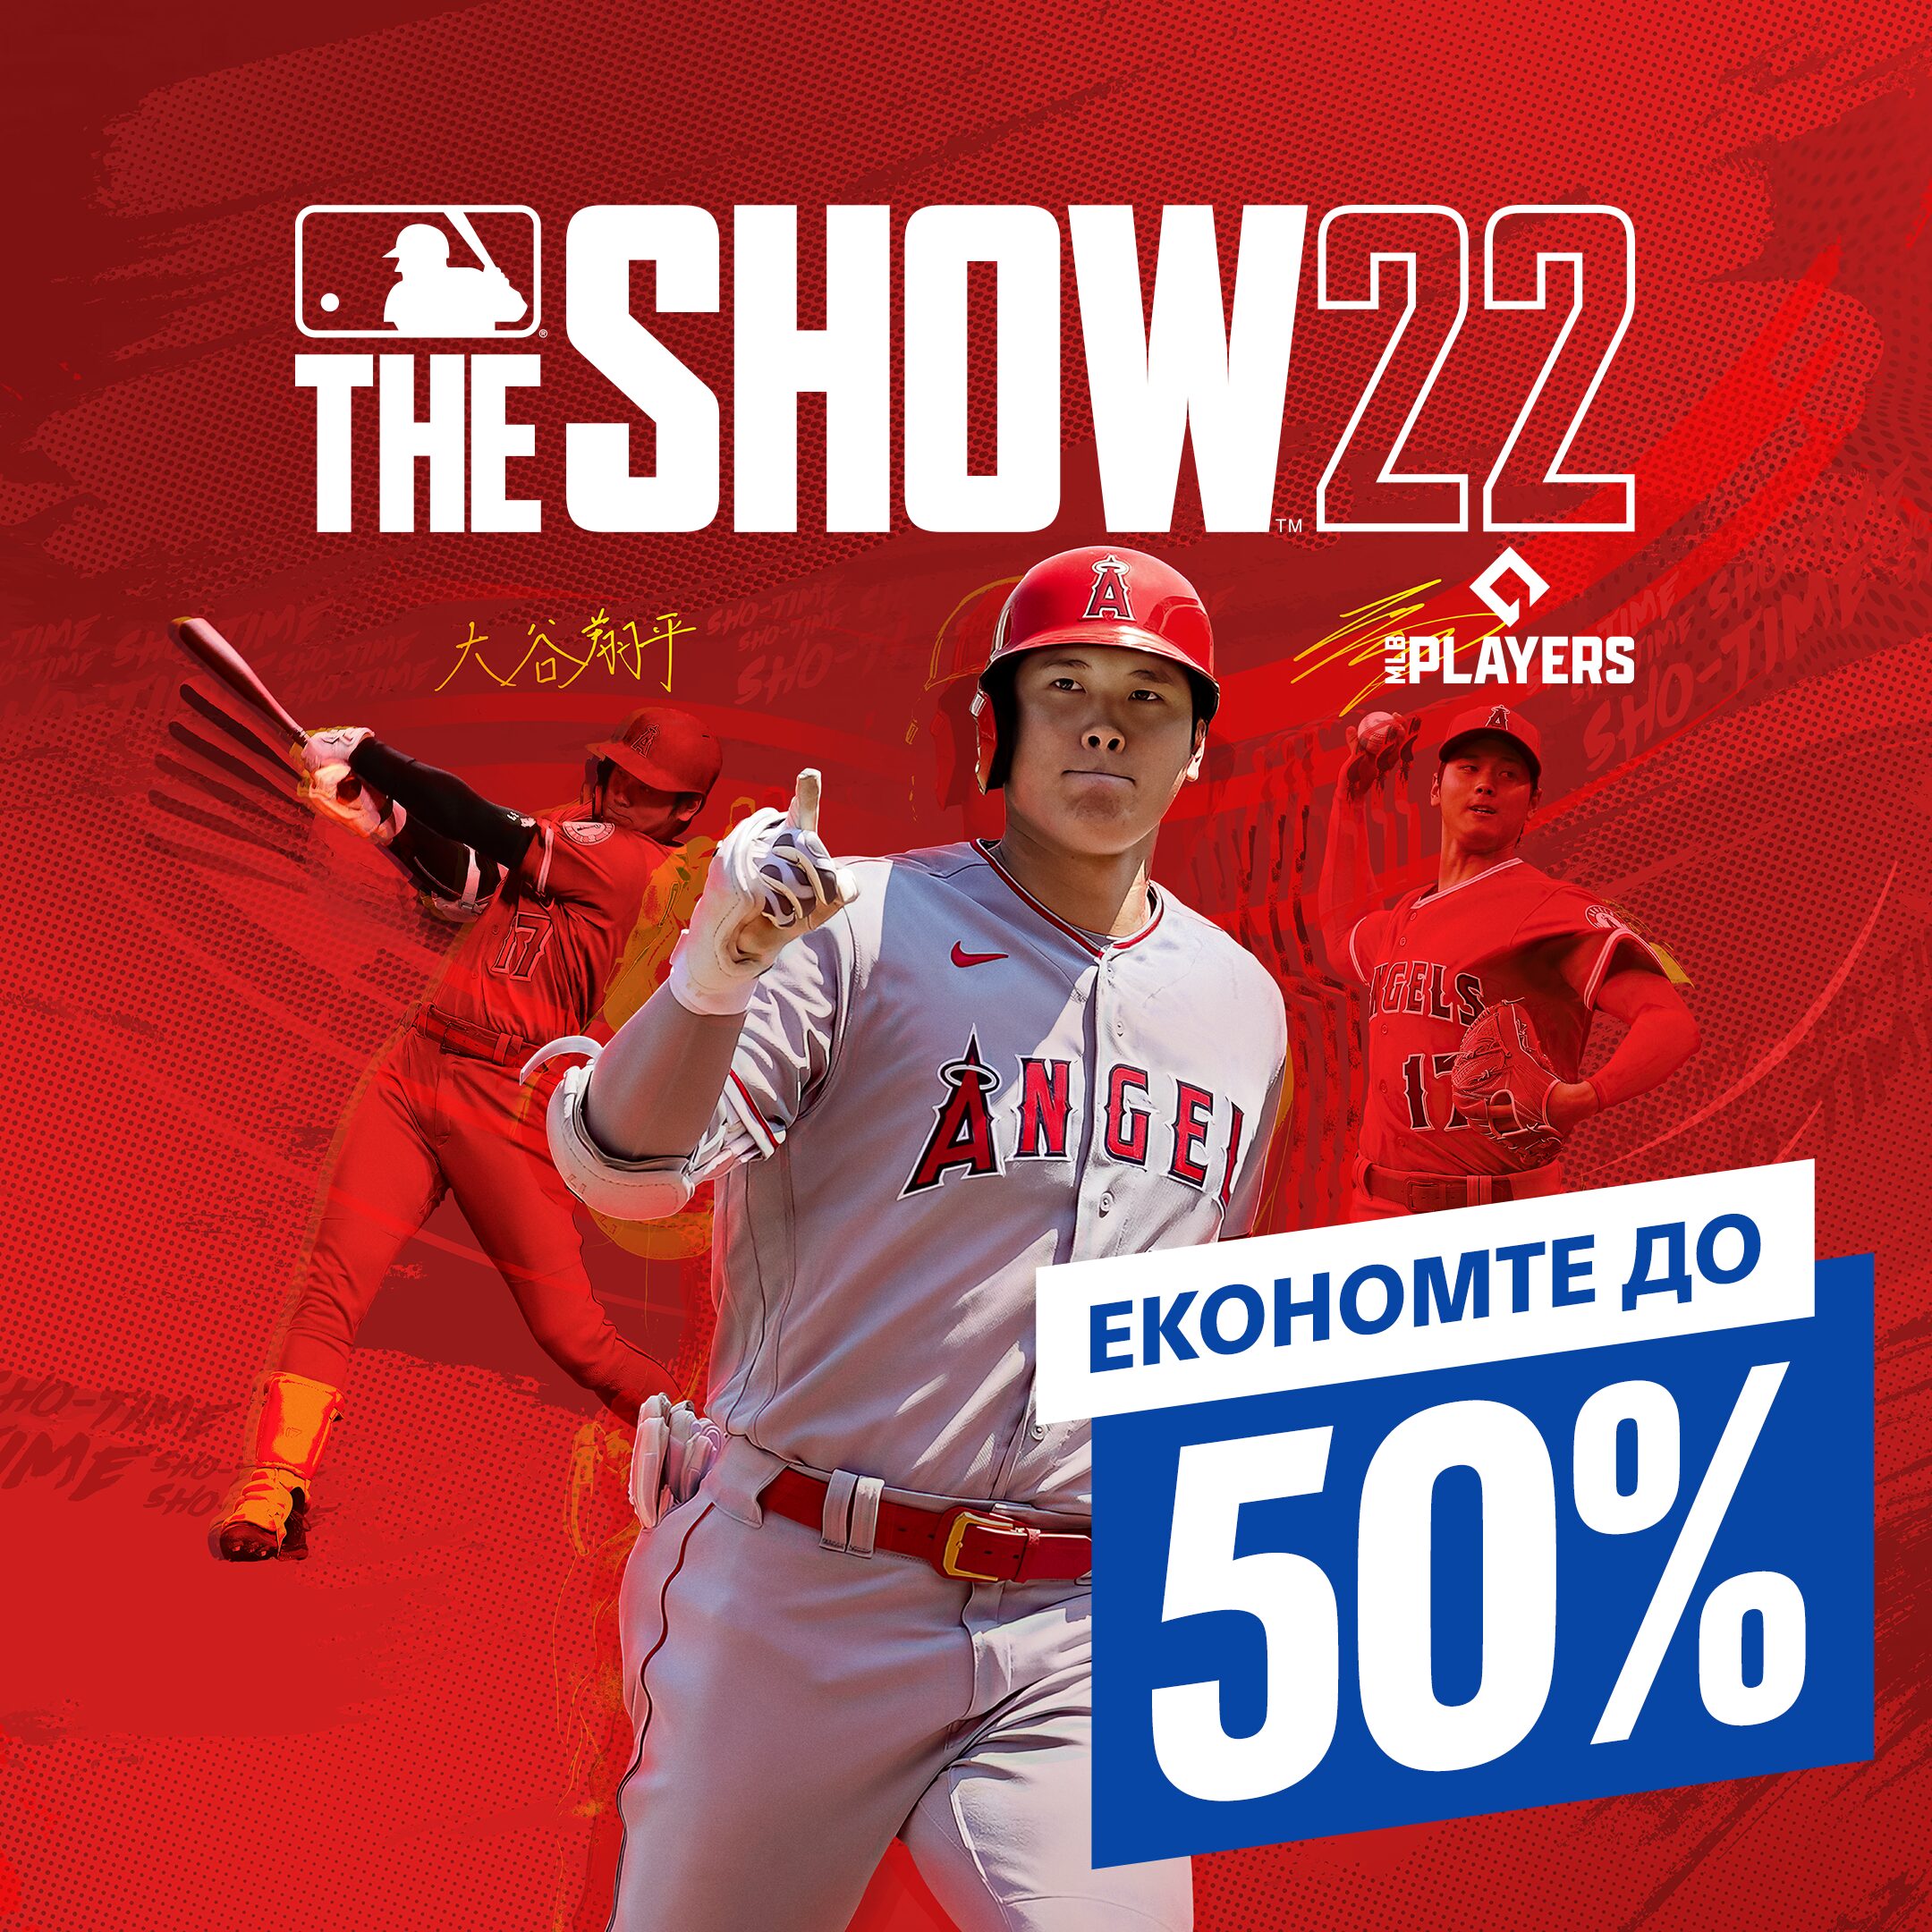 [PROMO] MLB Ad-Hoc Offer